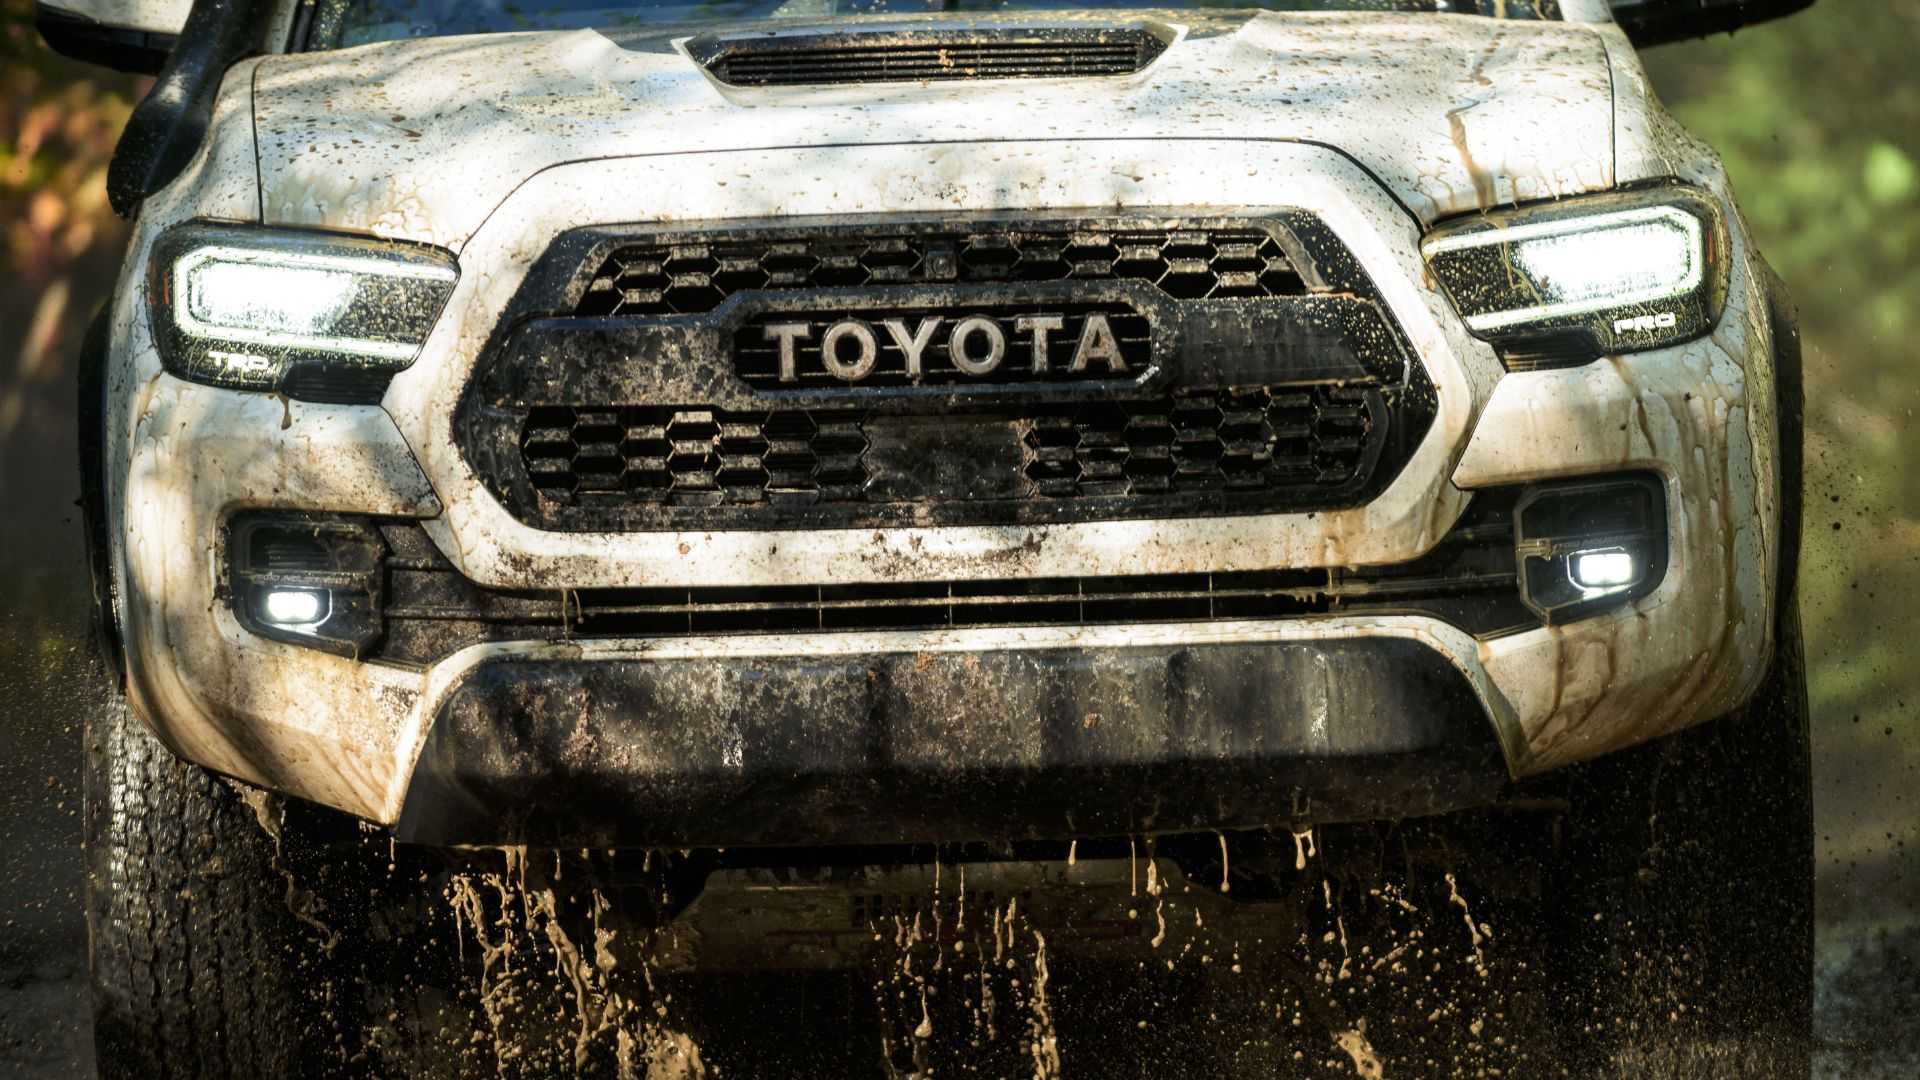 2020 Toyota Tacoma Revealed At Chicago Auto Show - autoevolution